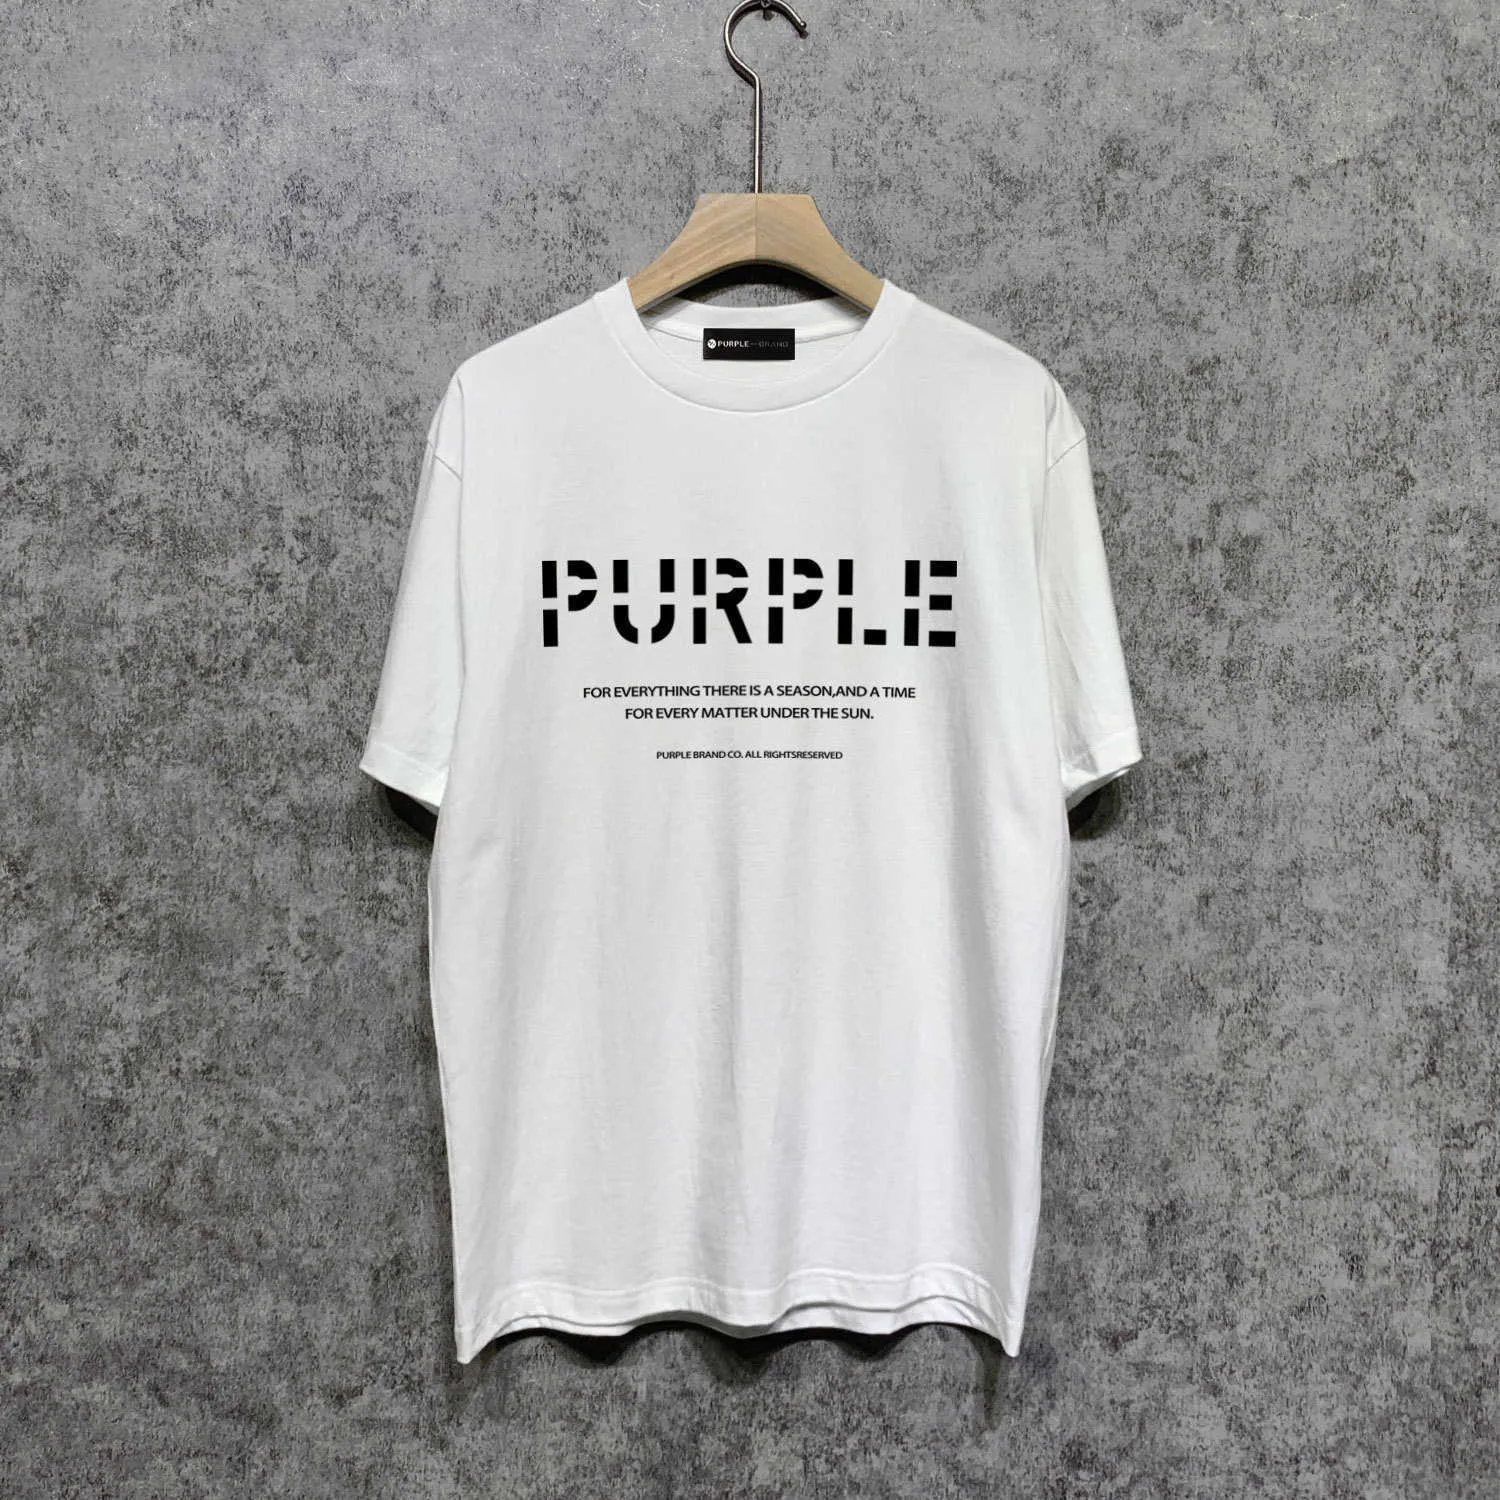 Long term trendy brand PURPLE BRAND T SHIRT short sleeved T-shirt shirtC3Z8